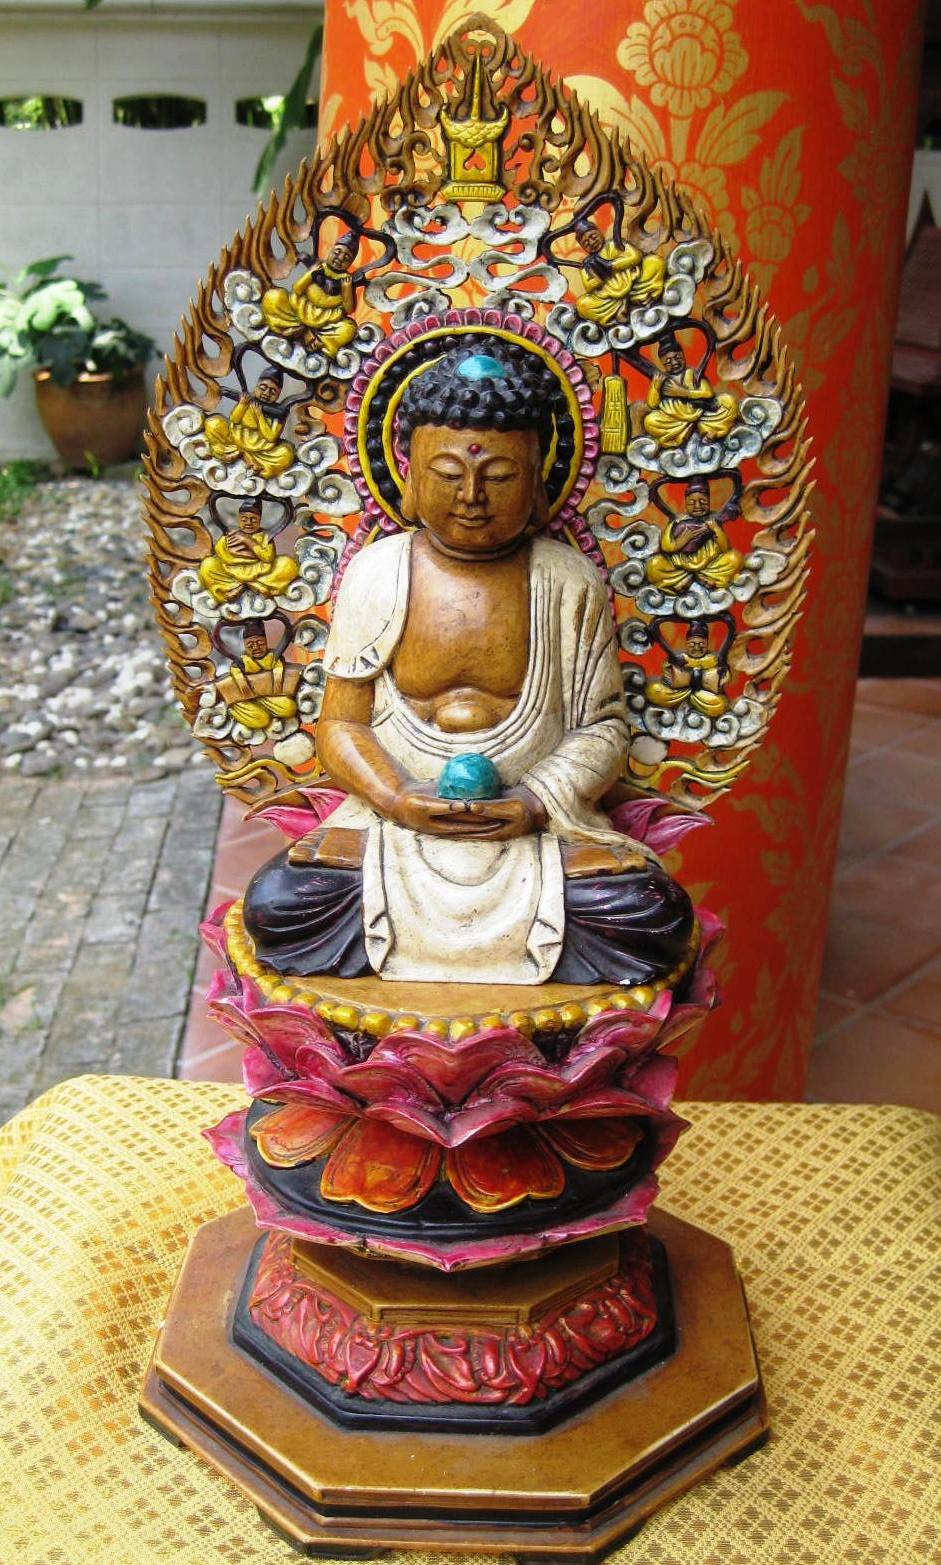 Carved Stone Buddha on Bodhi Tree